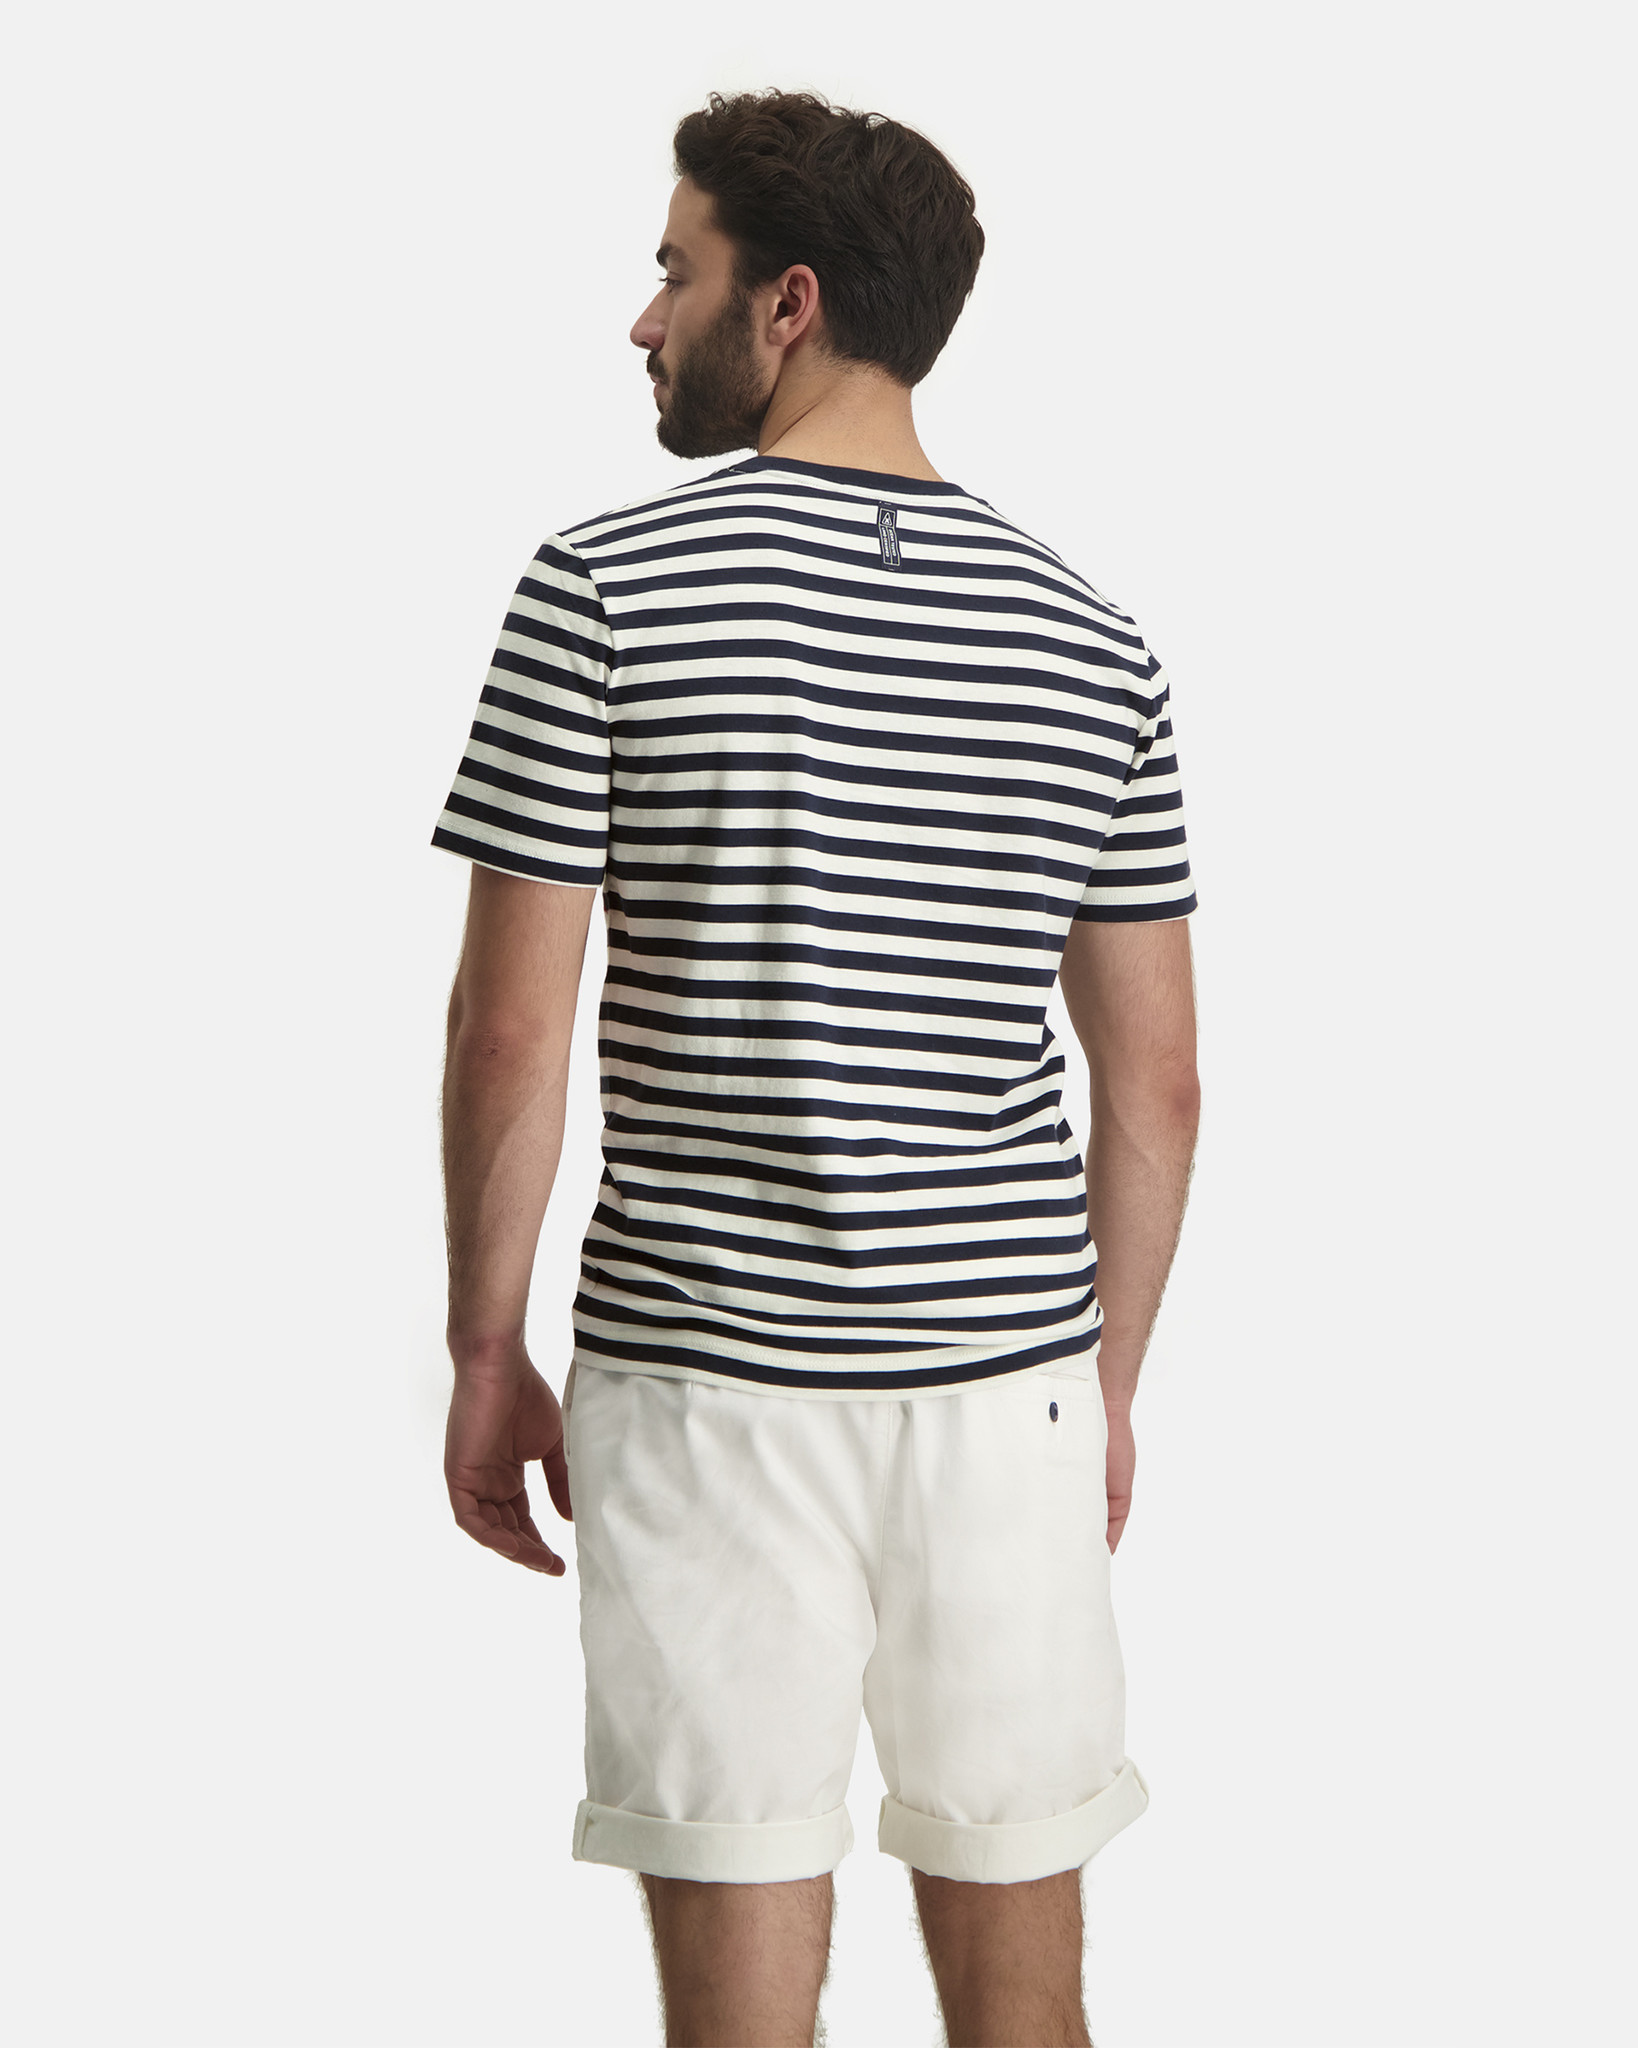 Classic striped Williamson T-shirt